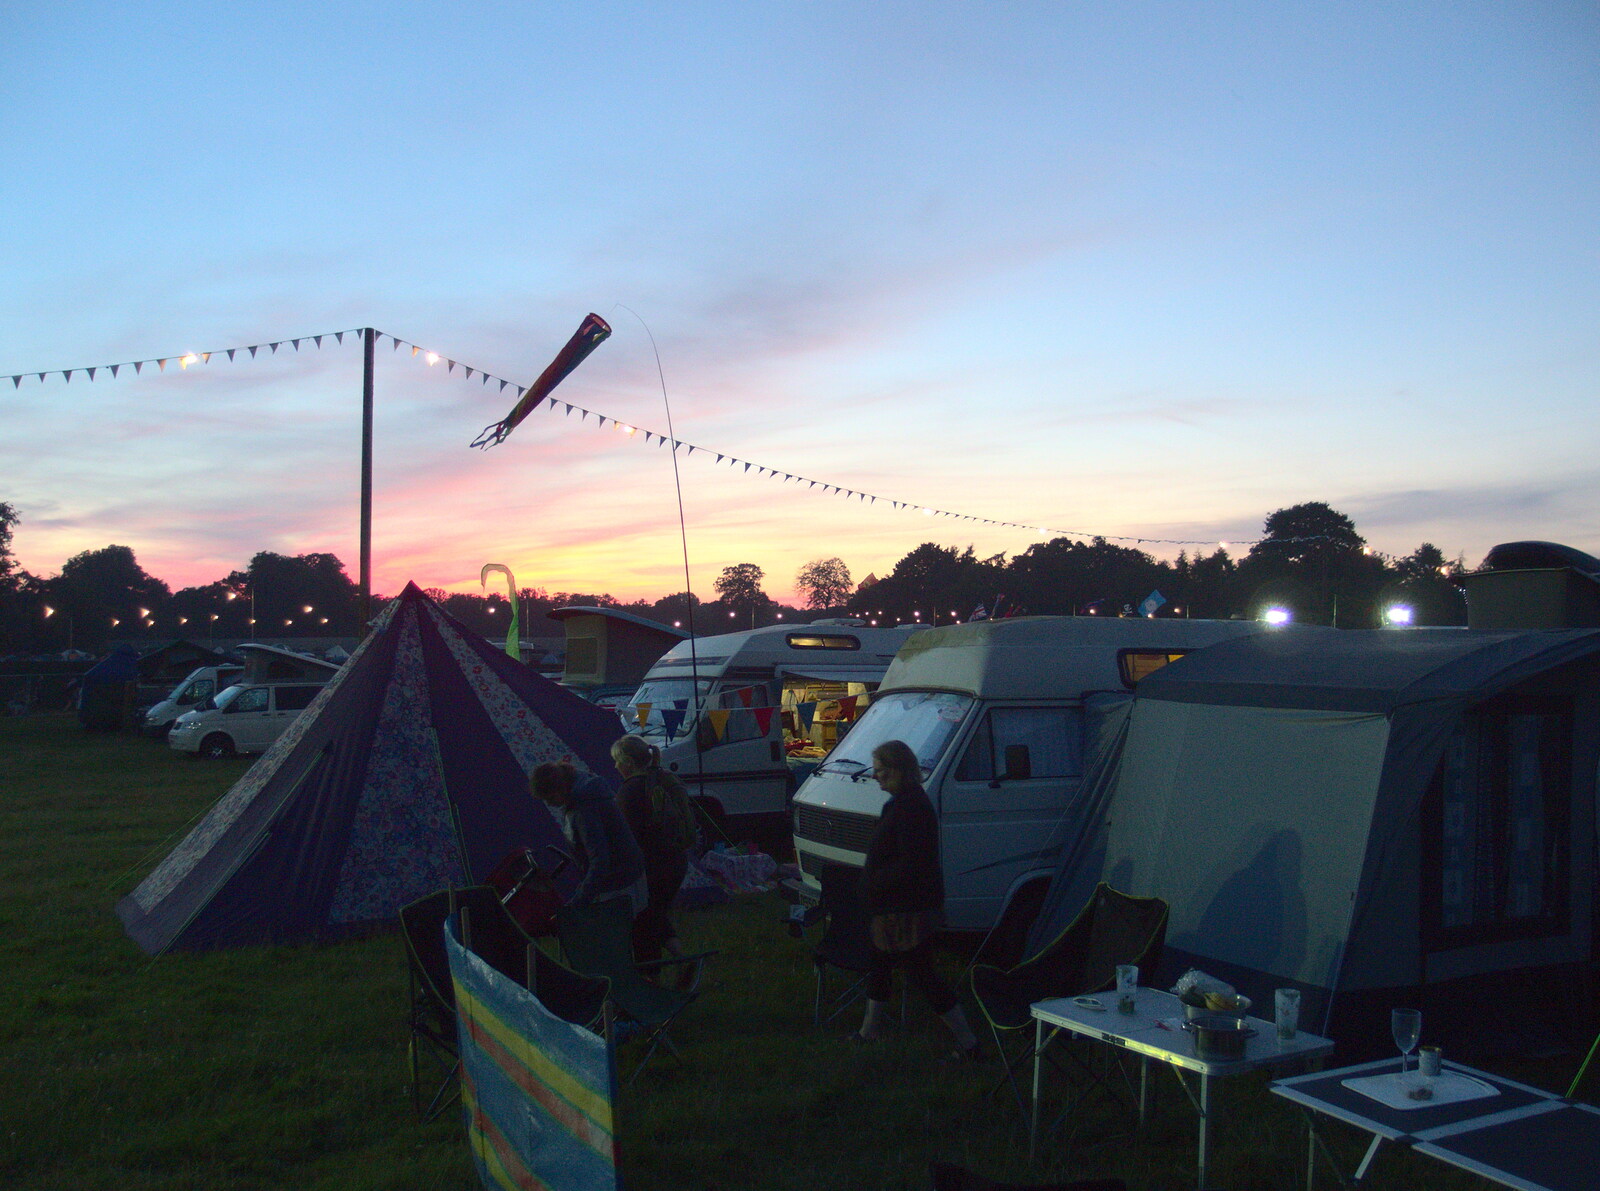 Campsite by dusk from Latitude Festival, Henham Park, Southwold, Suffolk - 17th July 2014